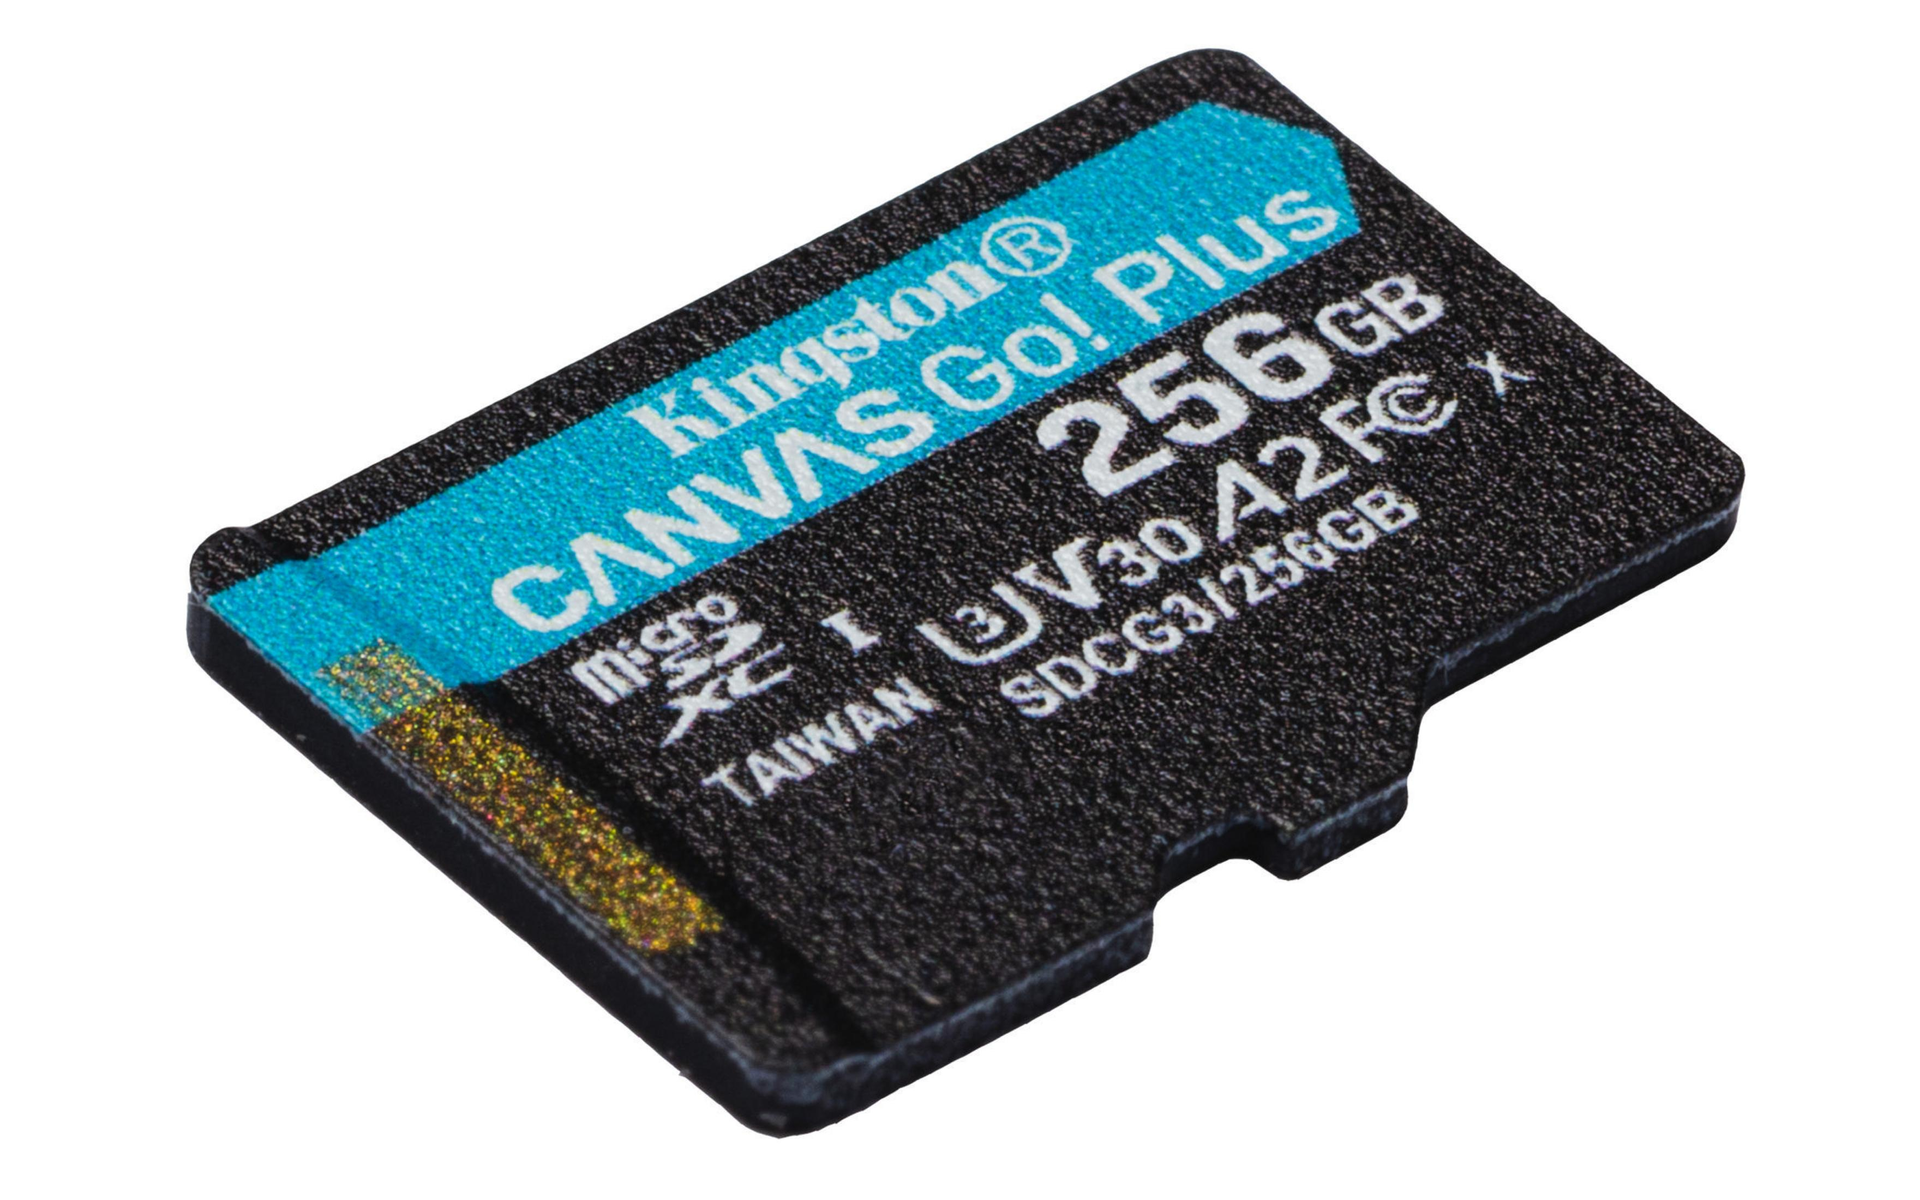 Micro-SD 891255 SDCG3/256GB, KINGSTON GB, Speicherkarte, 90 MB/s 256